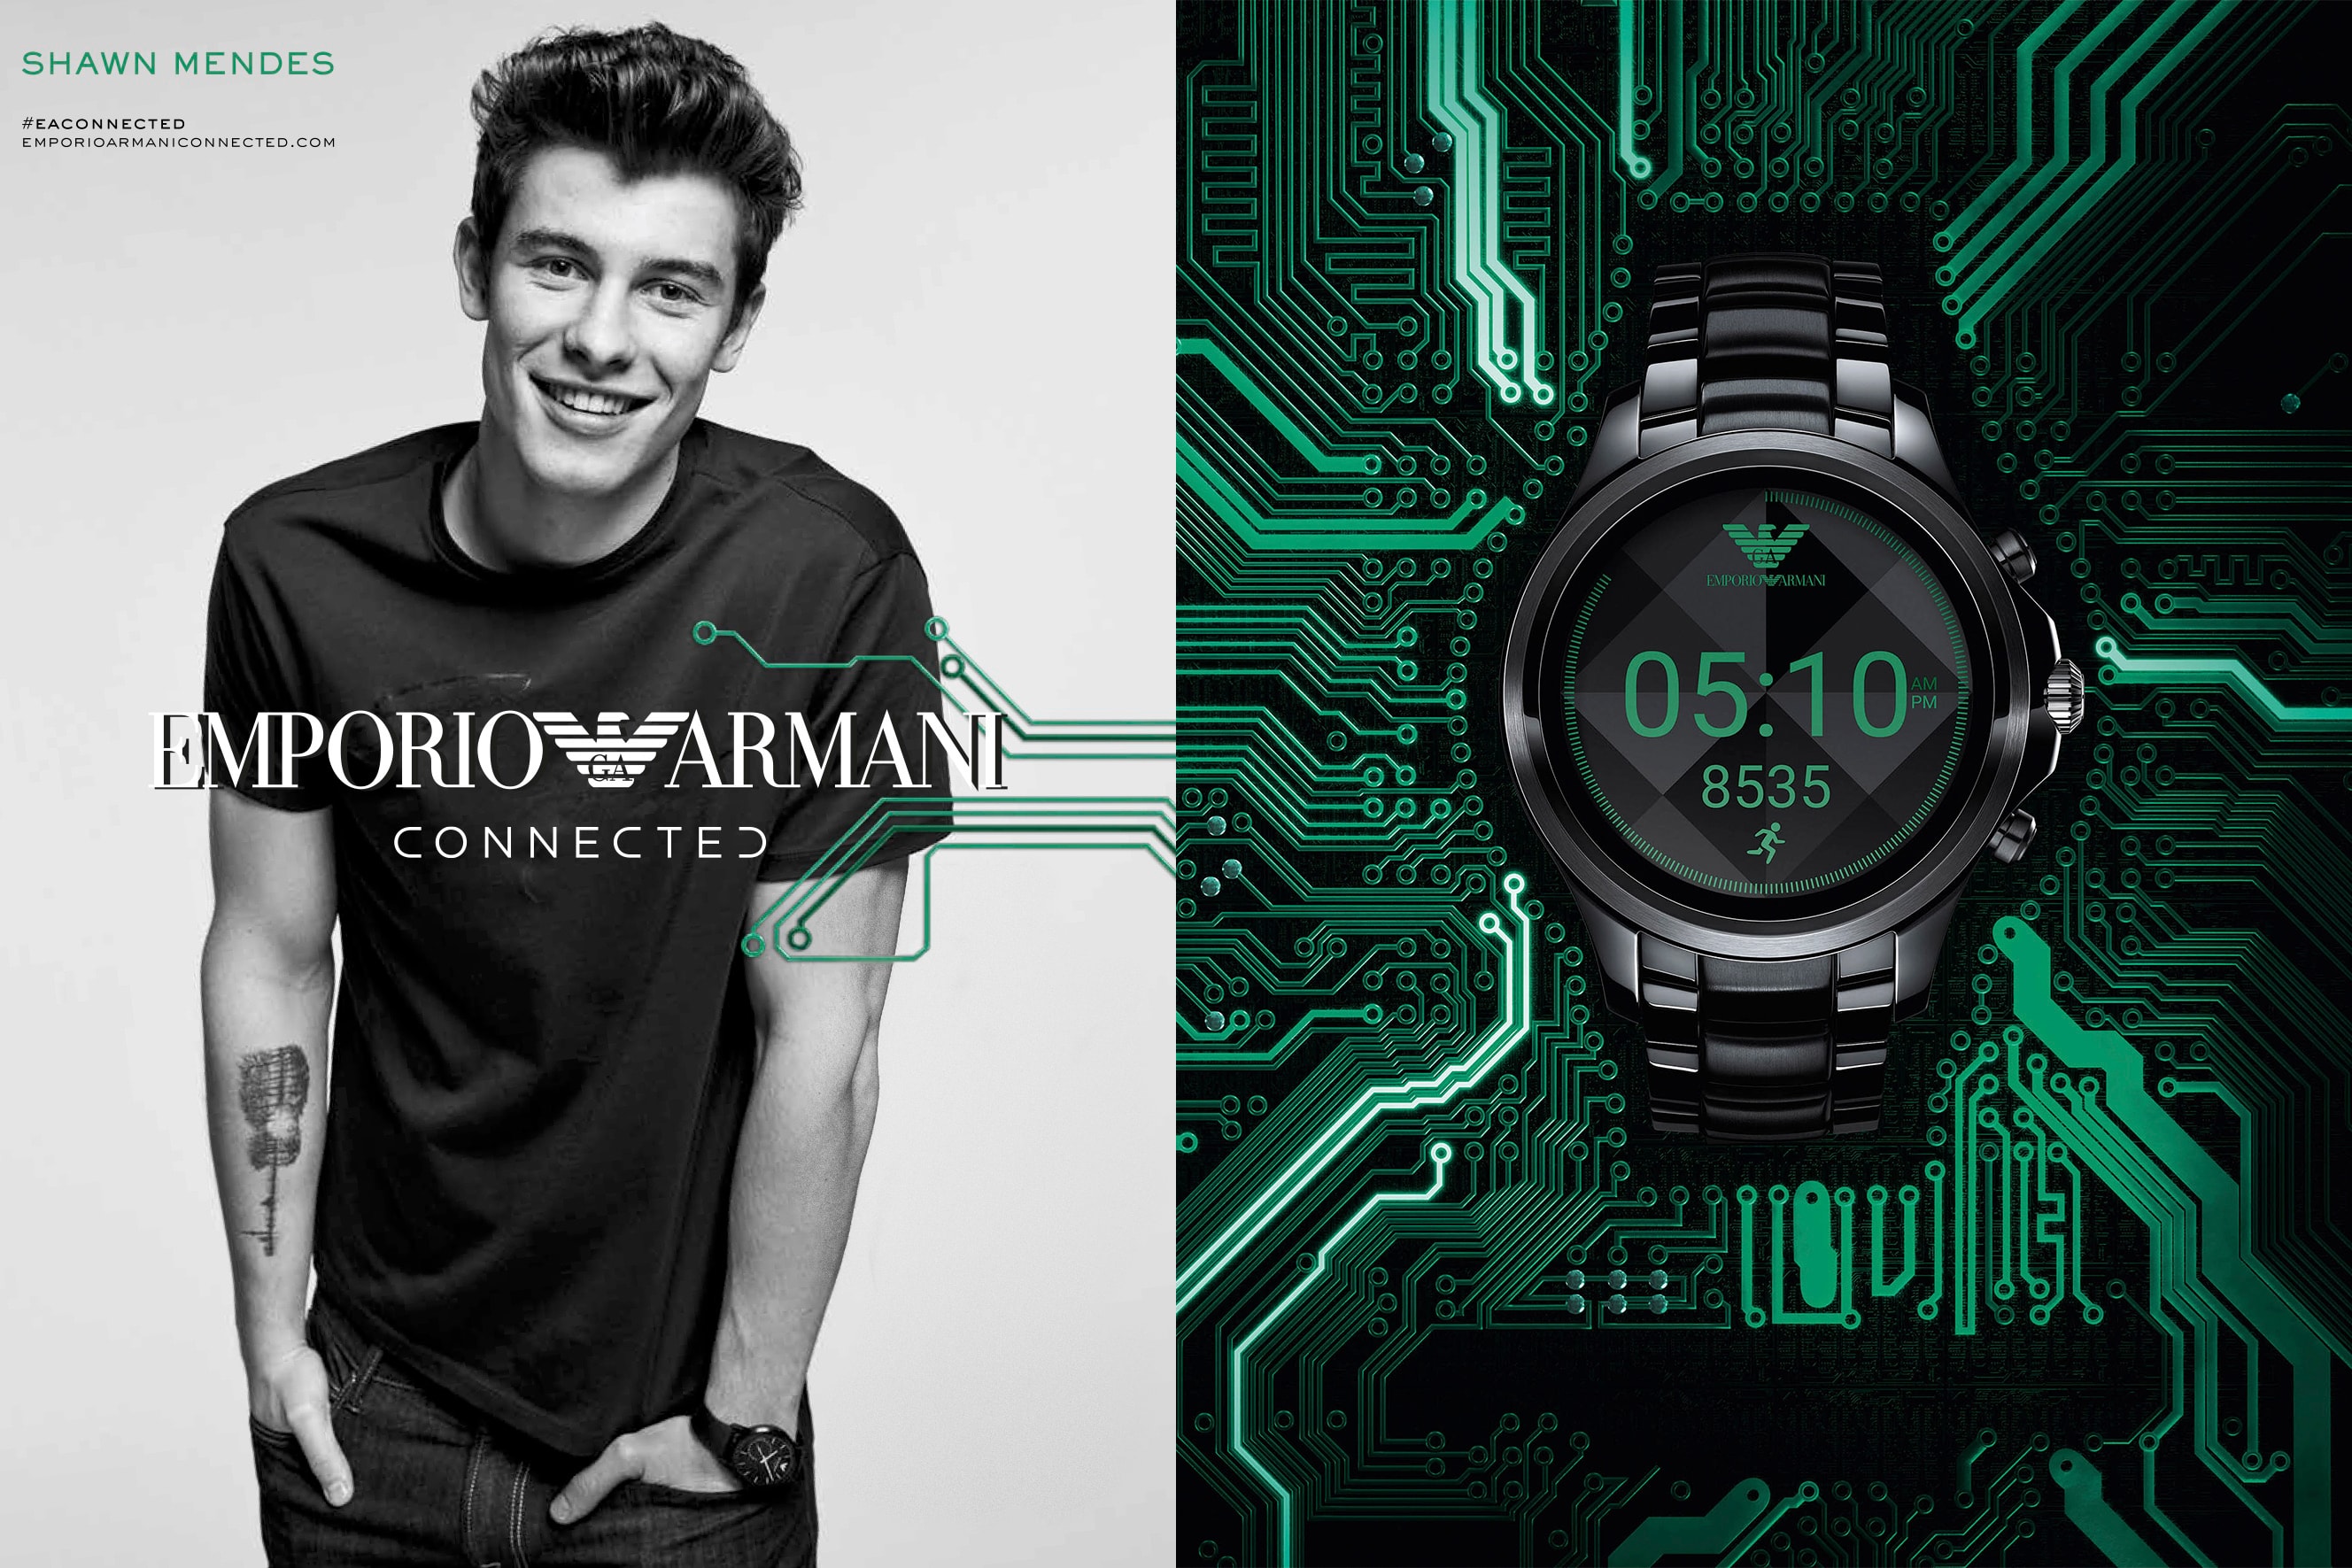 Emporio Armani 也踏入智能腕錶領域，首次與 Shawn Mendes 推出合作系列